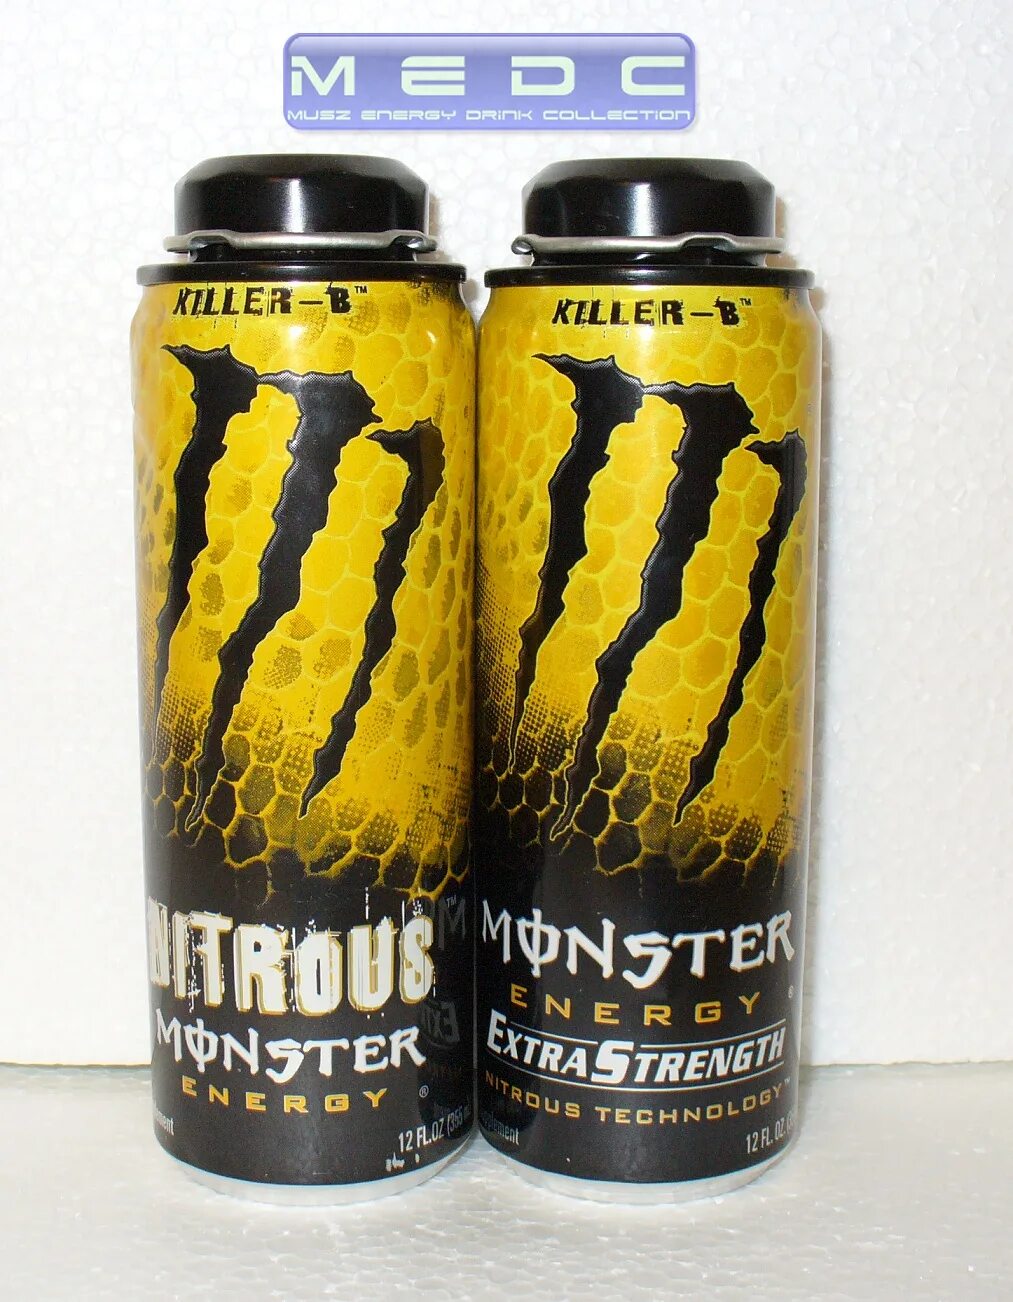 Monster Nitro Энергетик. Монстр Energy Nitro. Monster Energy Nitrous. Черно желтый монстр Энергетик. Monster killer